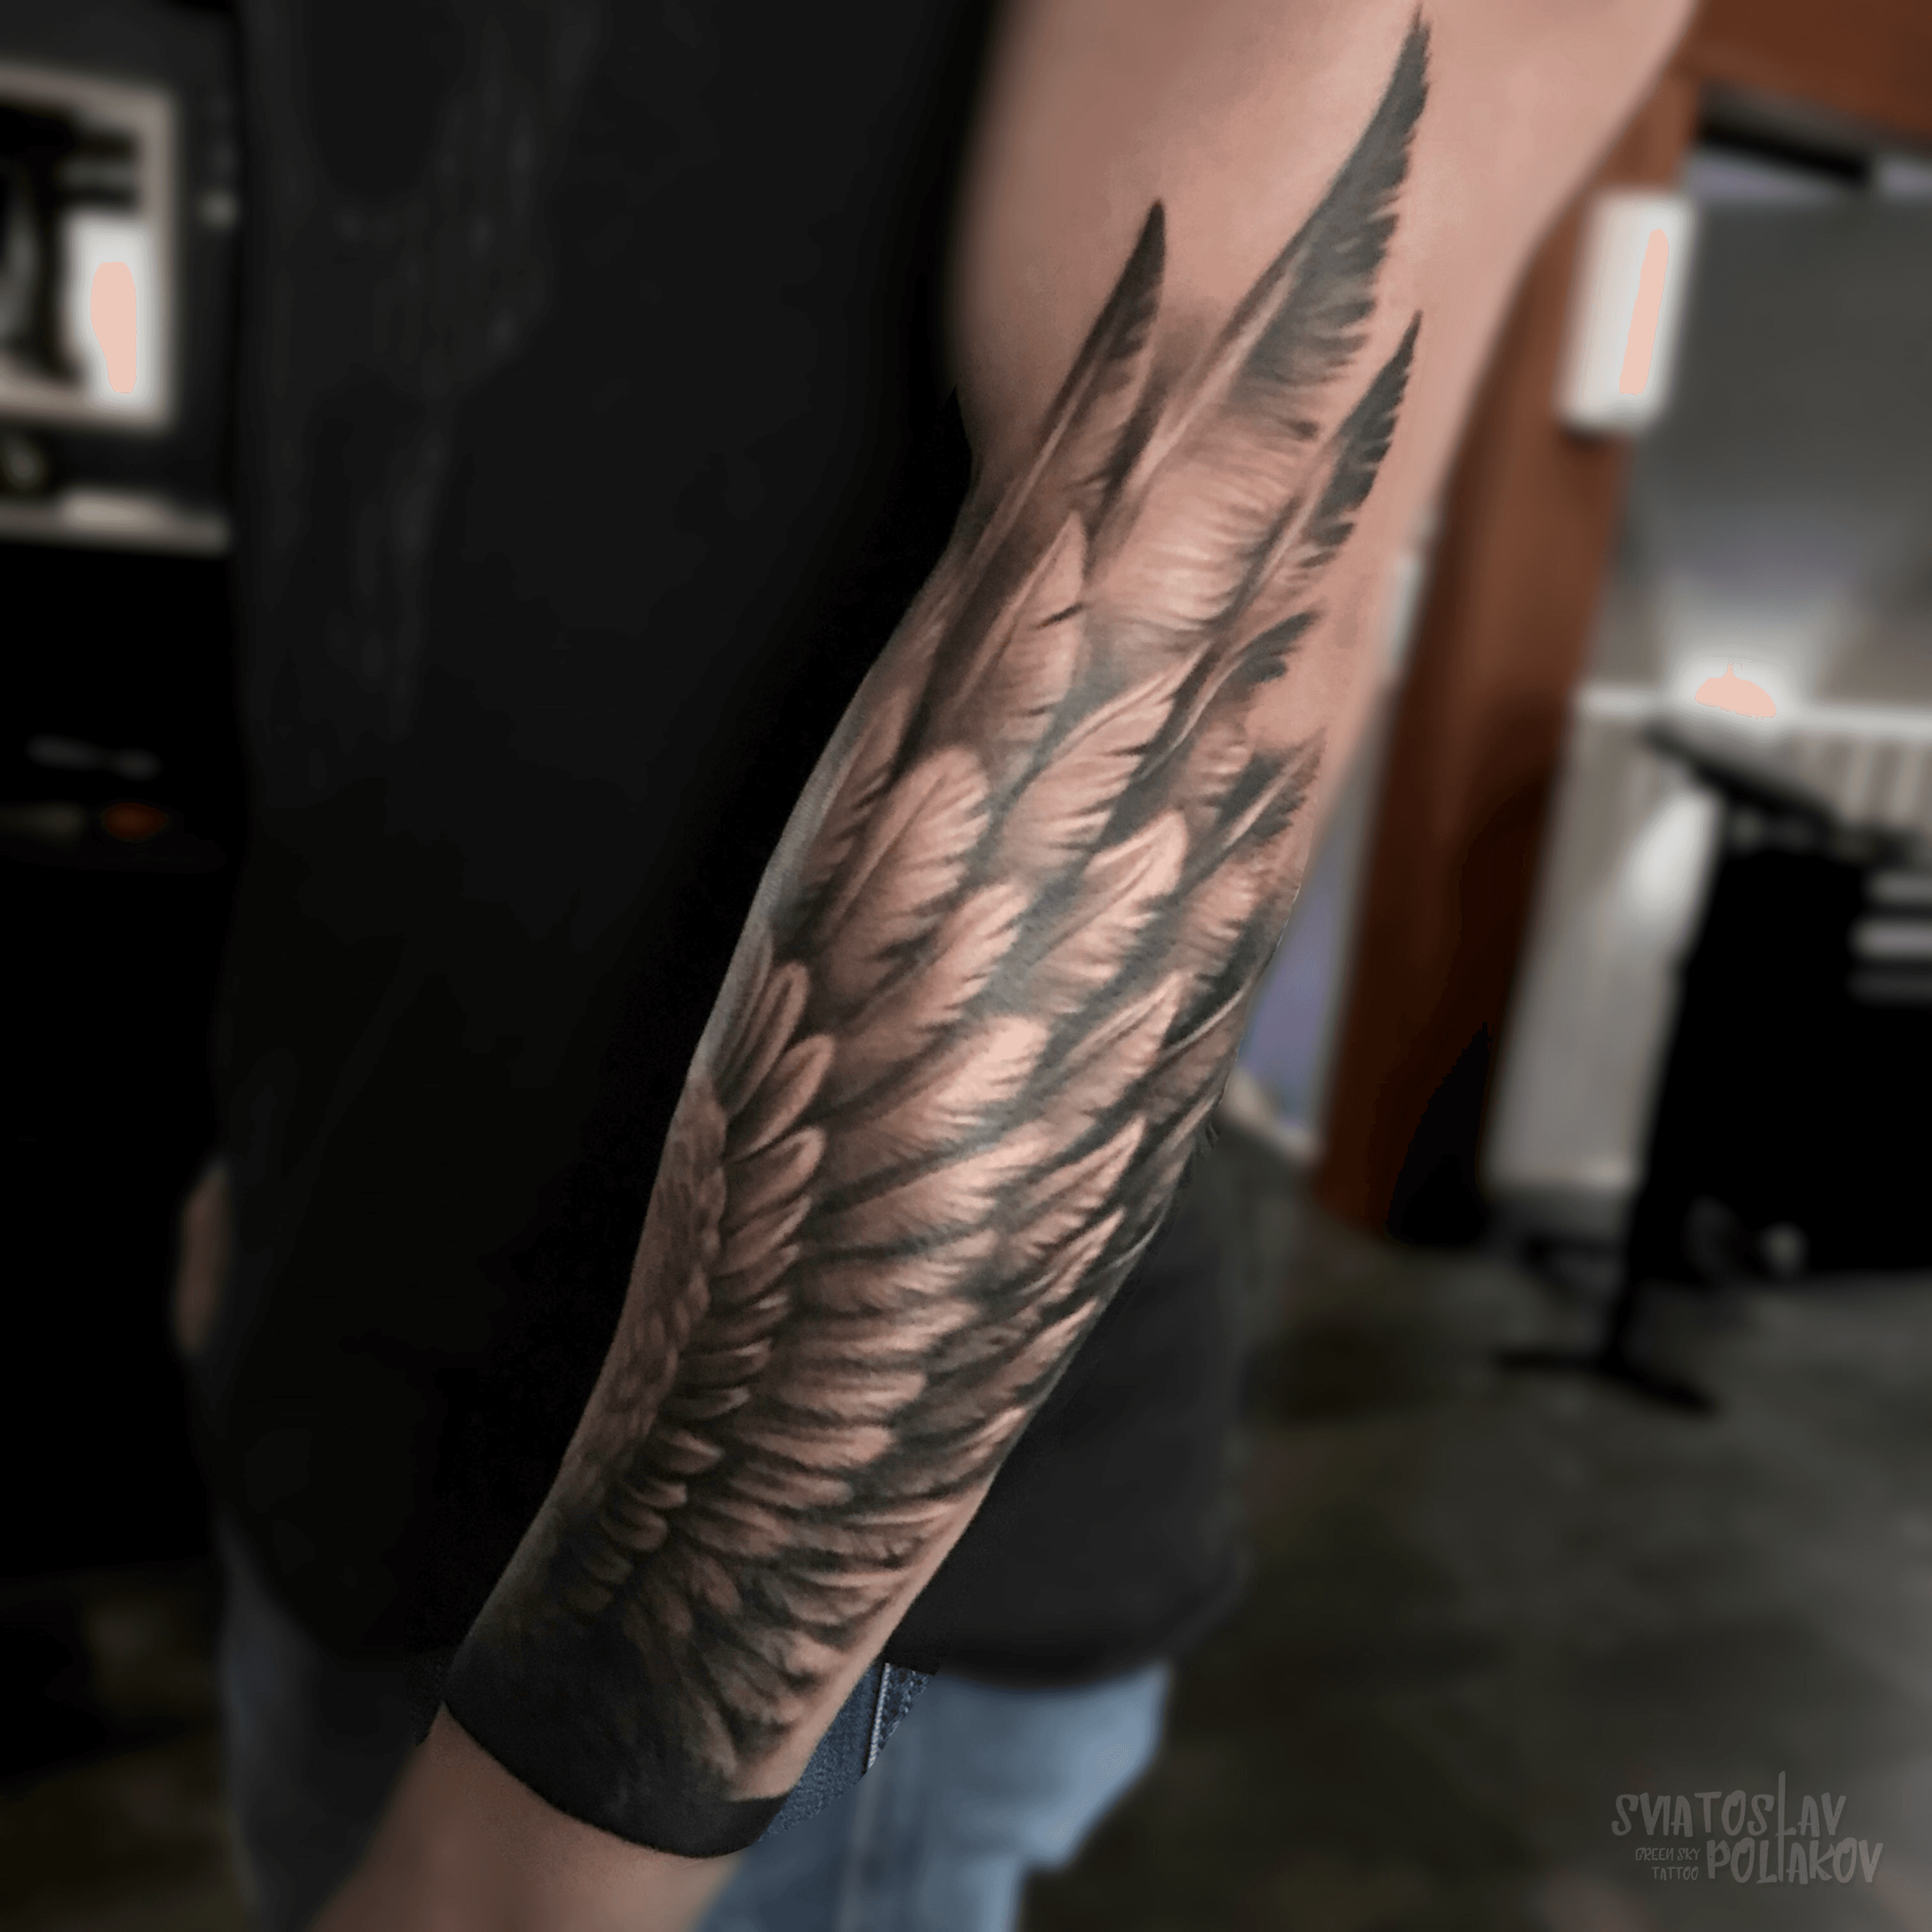 Eagle Tattoo Meaning  What Do Eagle Tattoos Symbolize